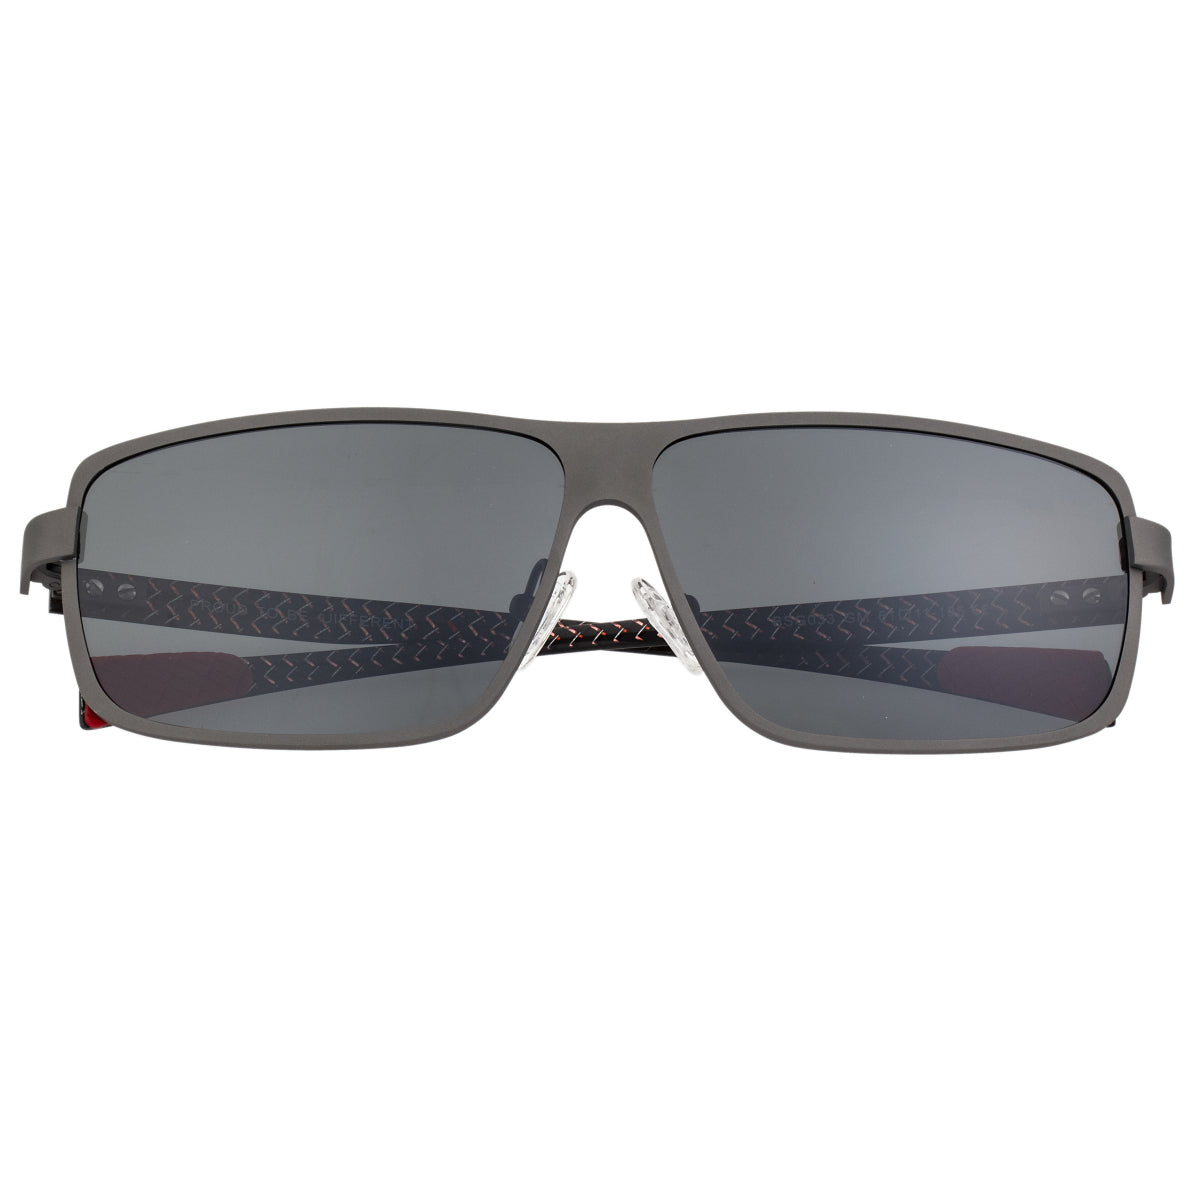 Breed Finlay Titanium Polarized Sunglasses - Gunmetal/Black - BSG033GM